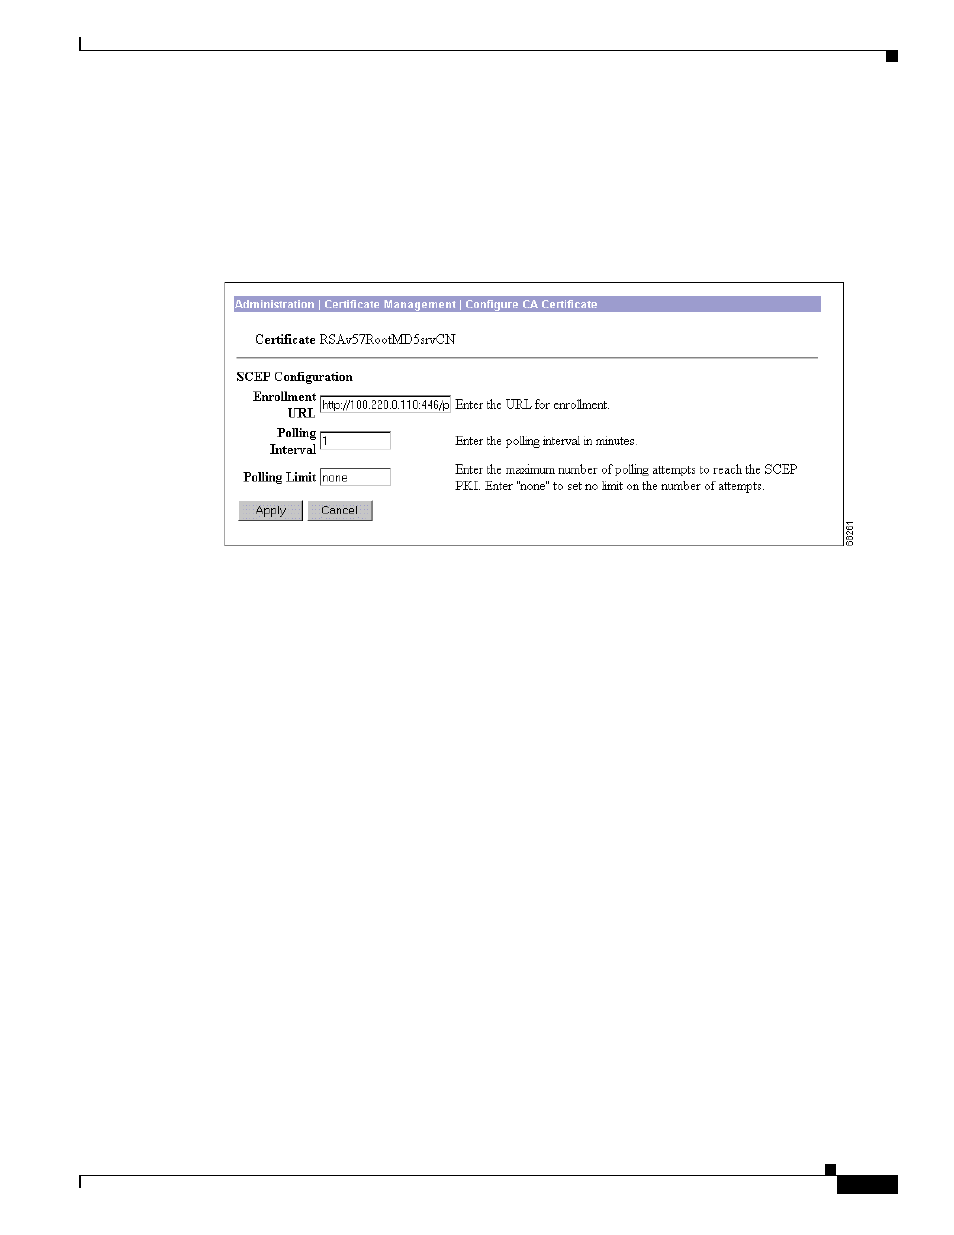 Certificate, Scep configuration, Enrollment url | Polling interval | Cisco VPN 3002 User Manual | Page 179 / 282